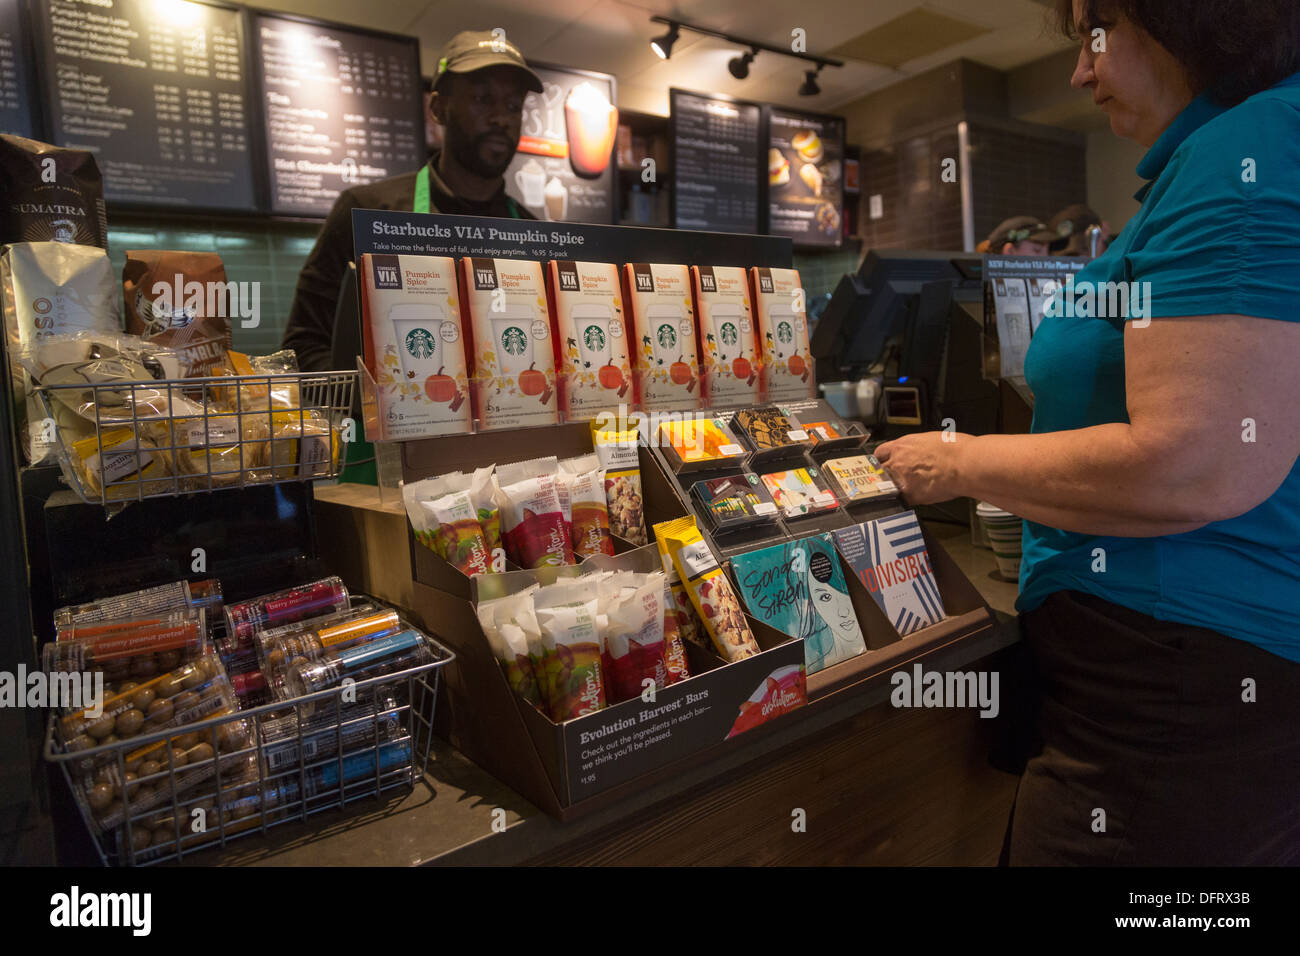 customer paying, Starbucks cafe, S 16th Street, Philadelphia, Pennsylvania, USA Stock Photo